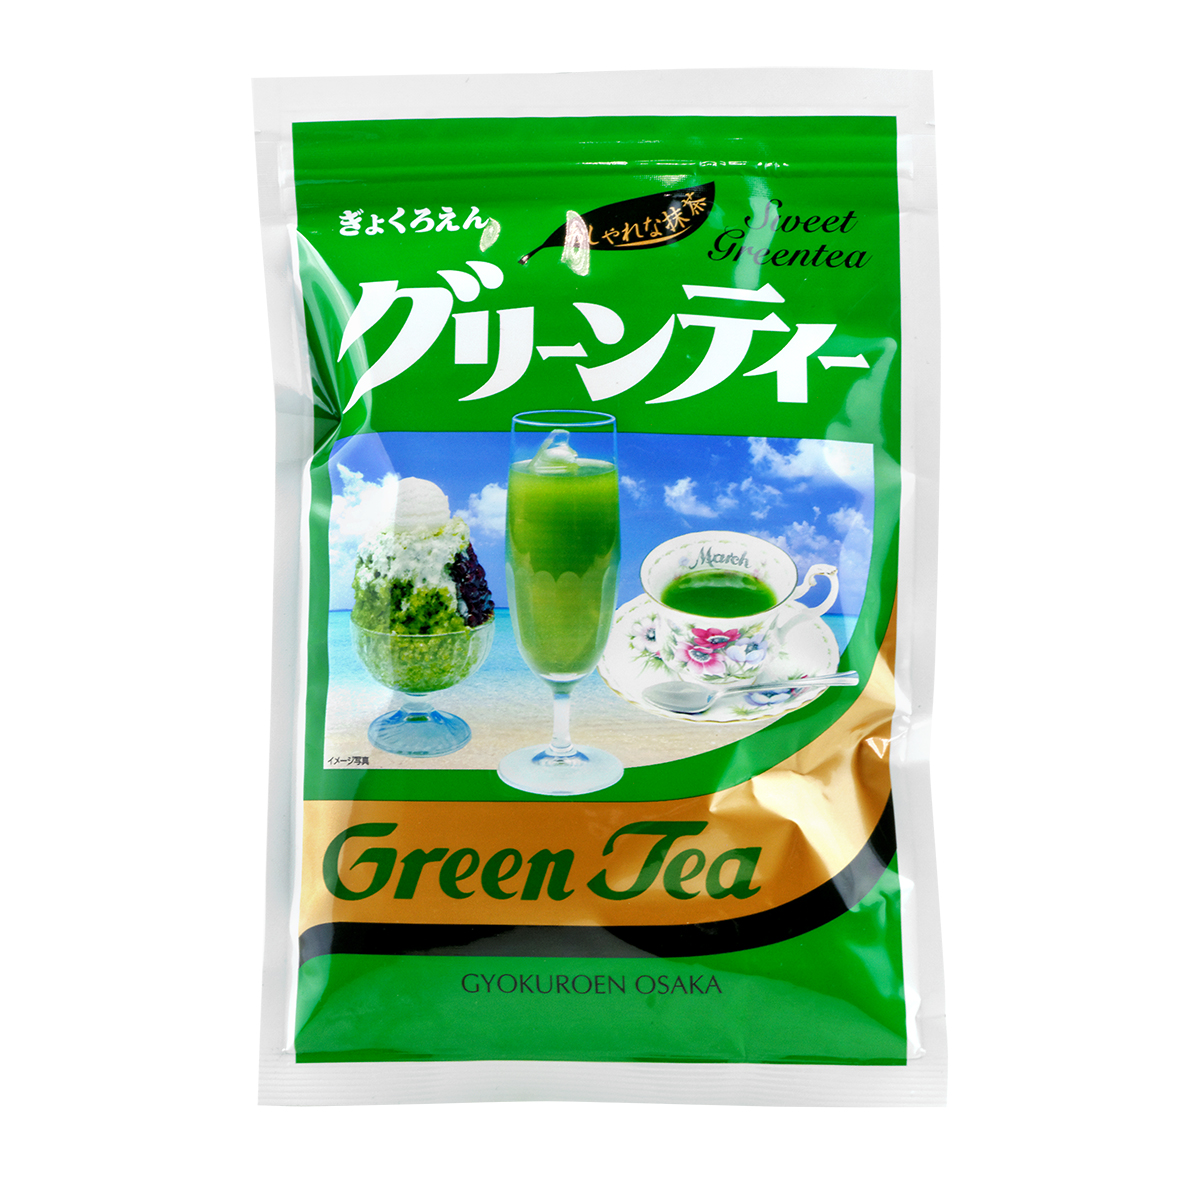 Ceai, cafea, bauturi fara alcool - Ceai verde (Matcha) GYOKUROEN 150g, asianfood.ro